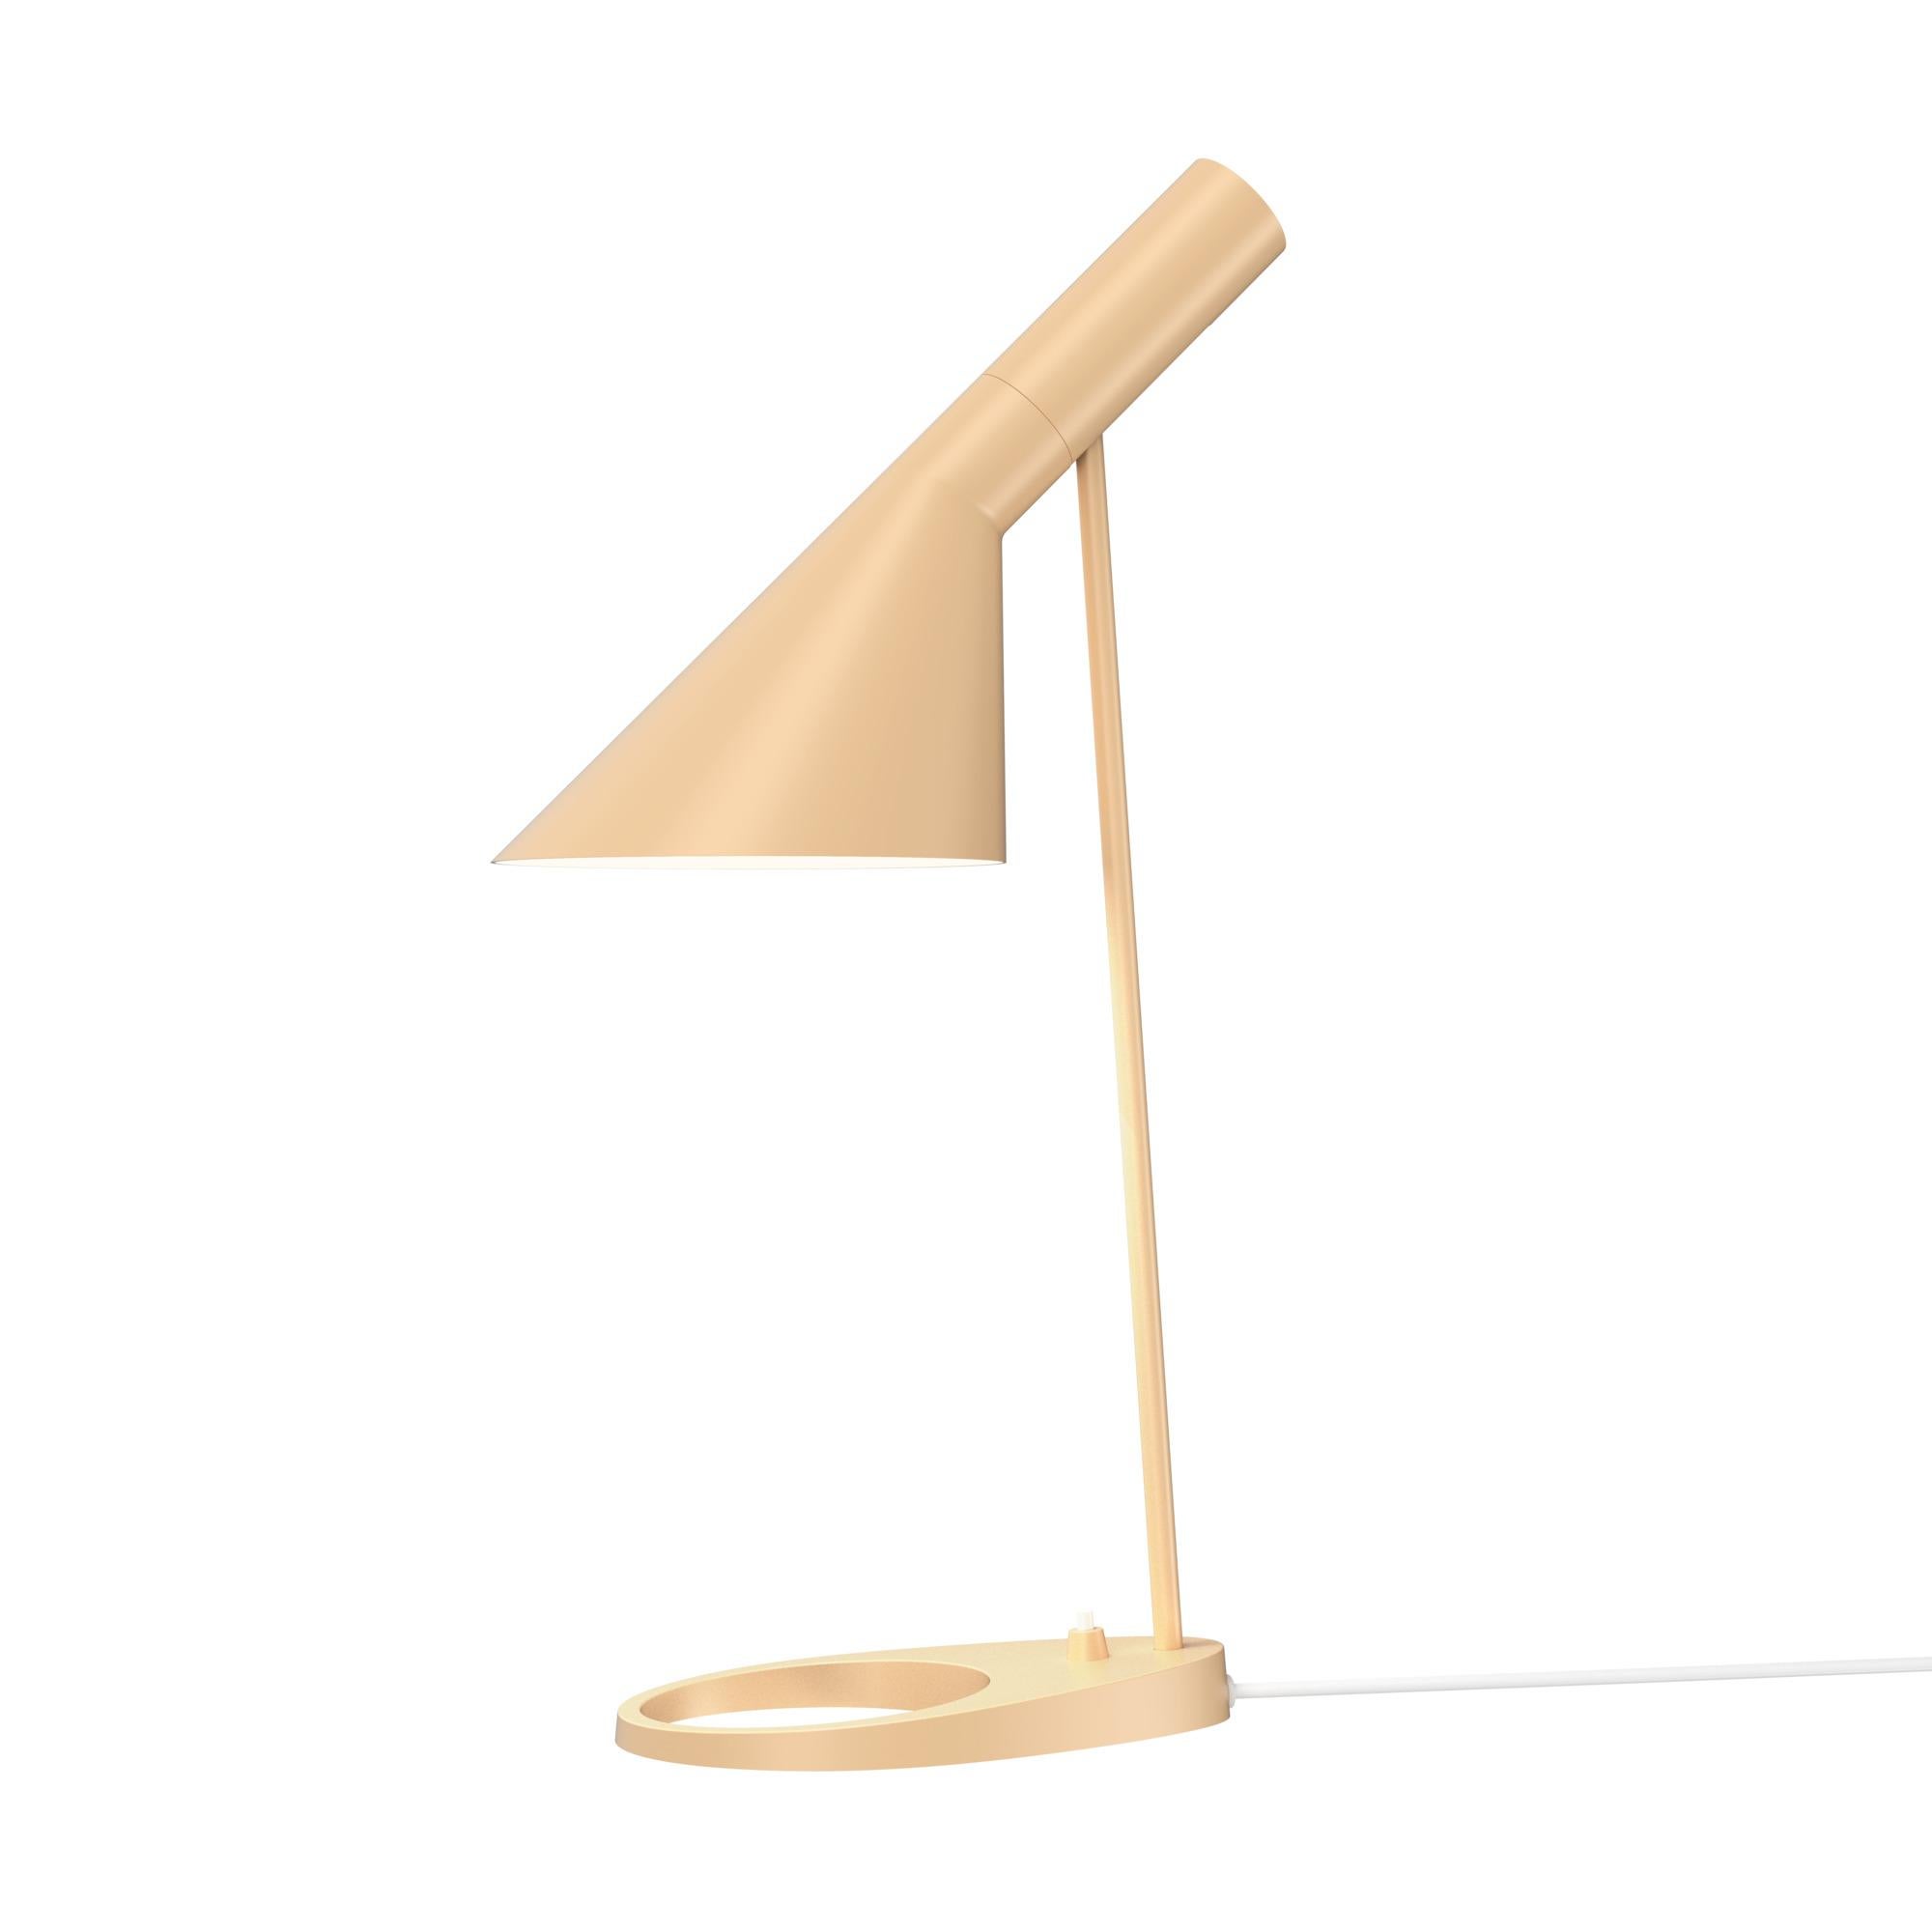 Arne Jacobsen AJ Table Lamp in Electric Orange for Louis Poulsen For Sale 6